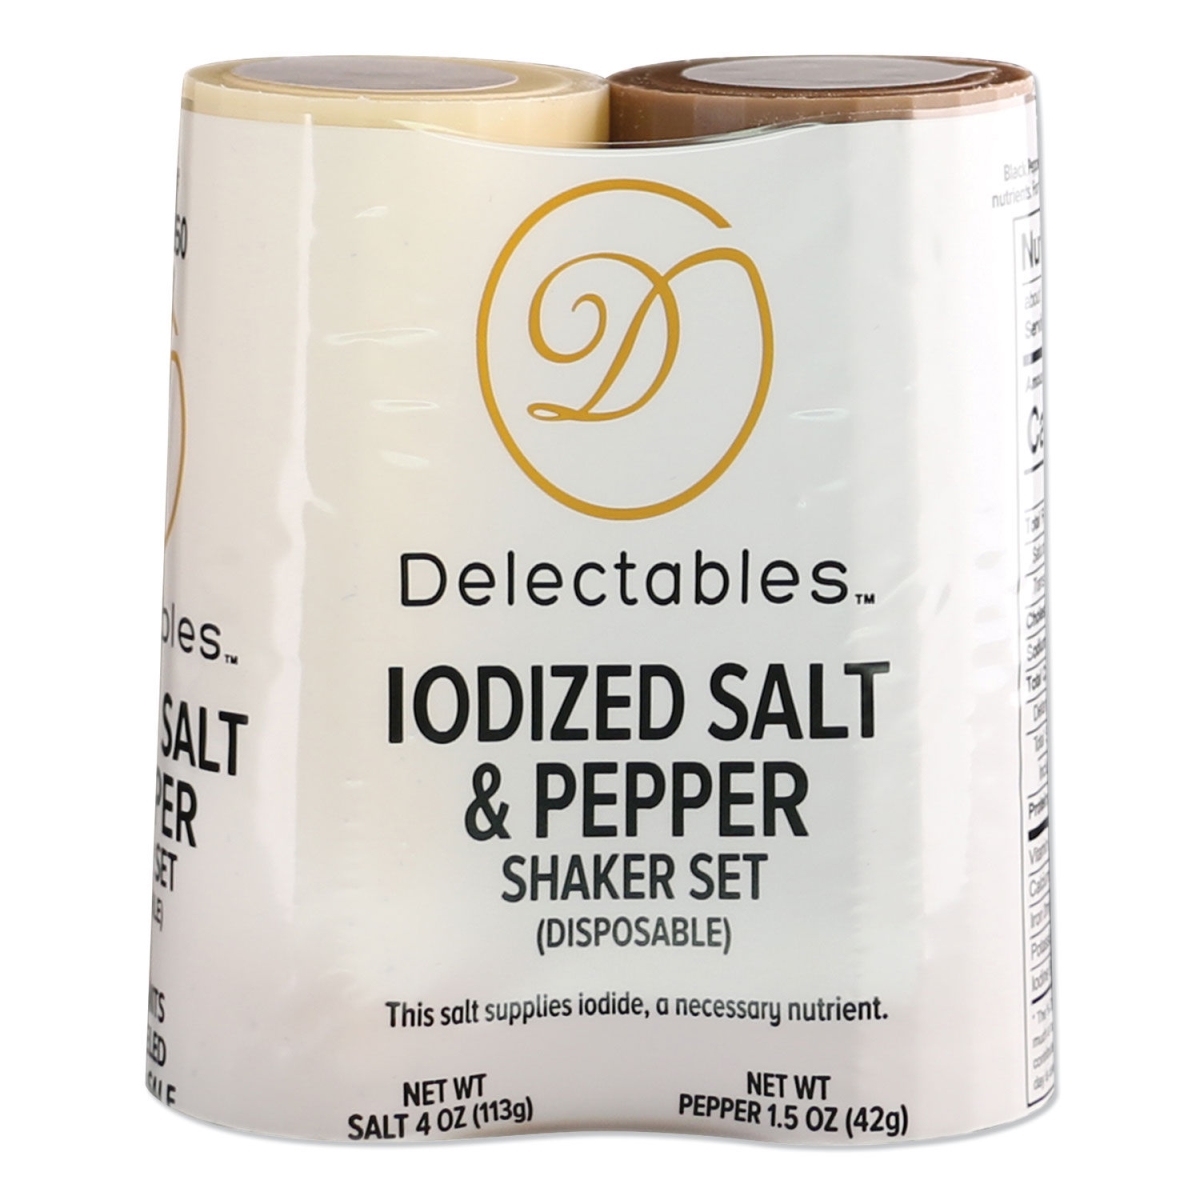 Picture of Delectables Disposable GRN13060 Shaker Combo 4 oz Salt & 1.5 oz Pepper Dispenser